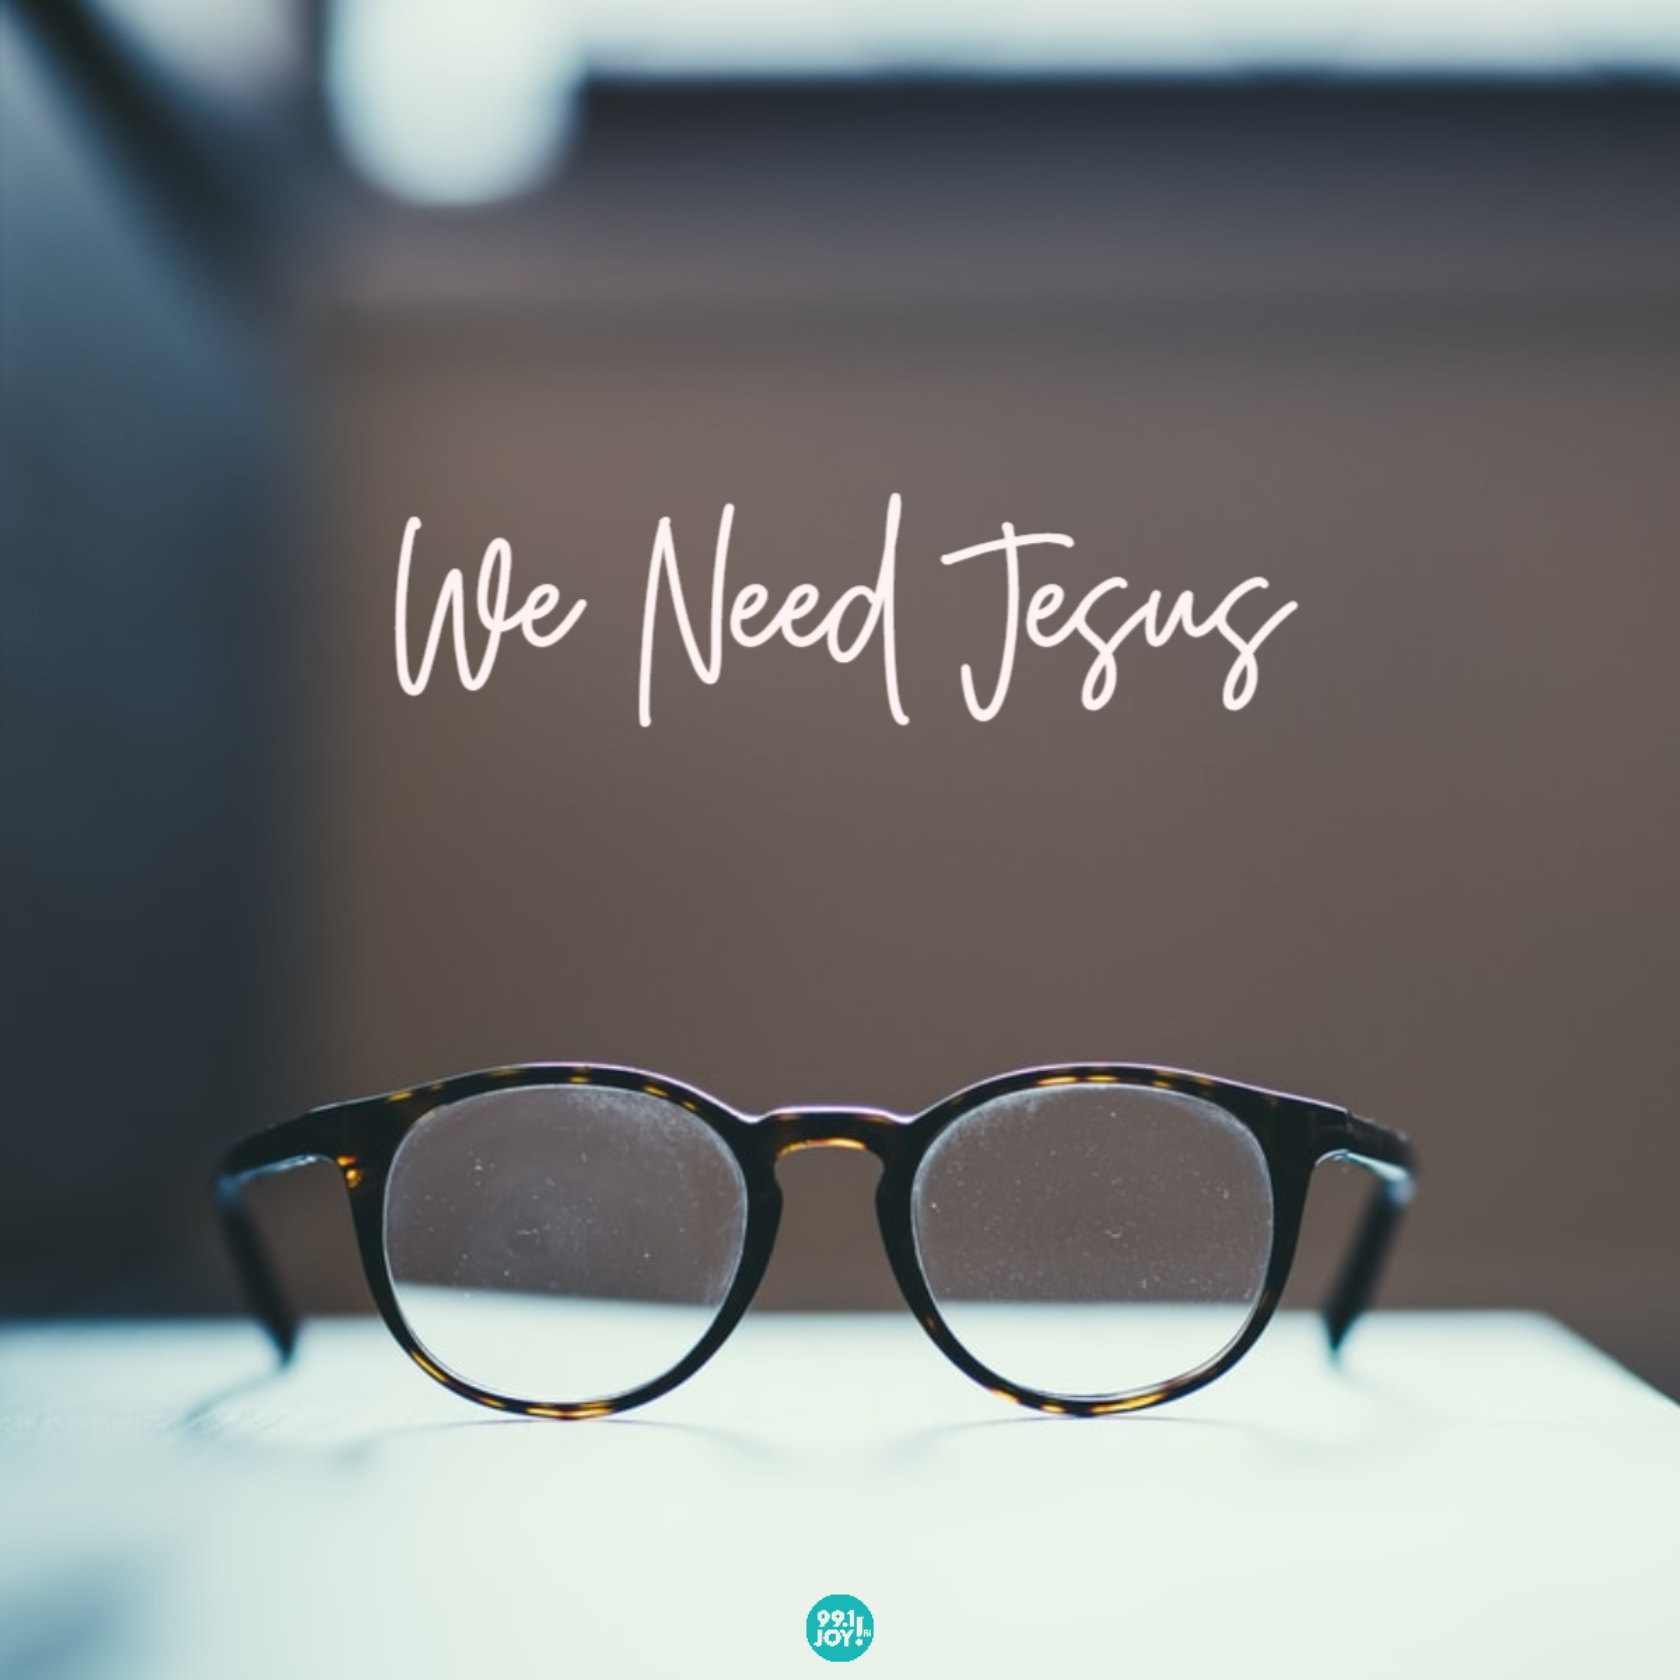 We Need Jesus